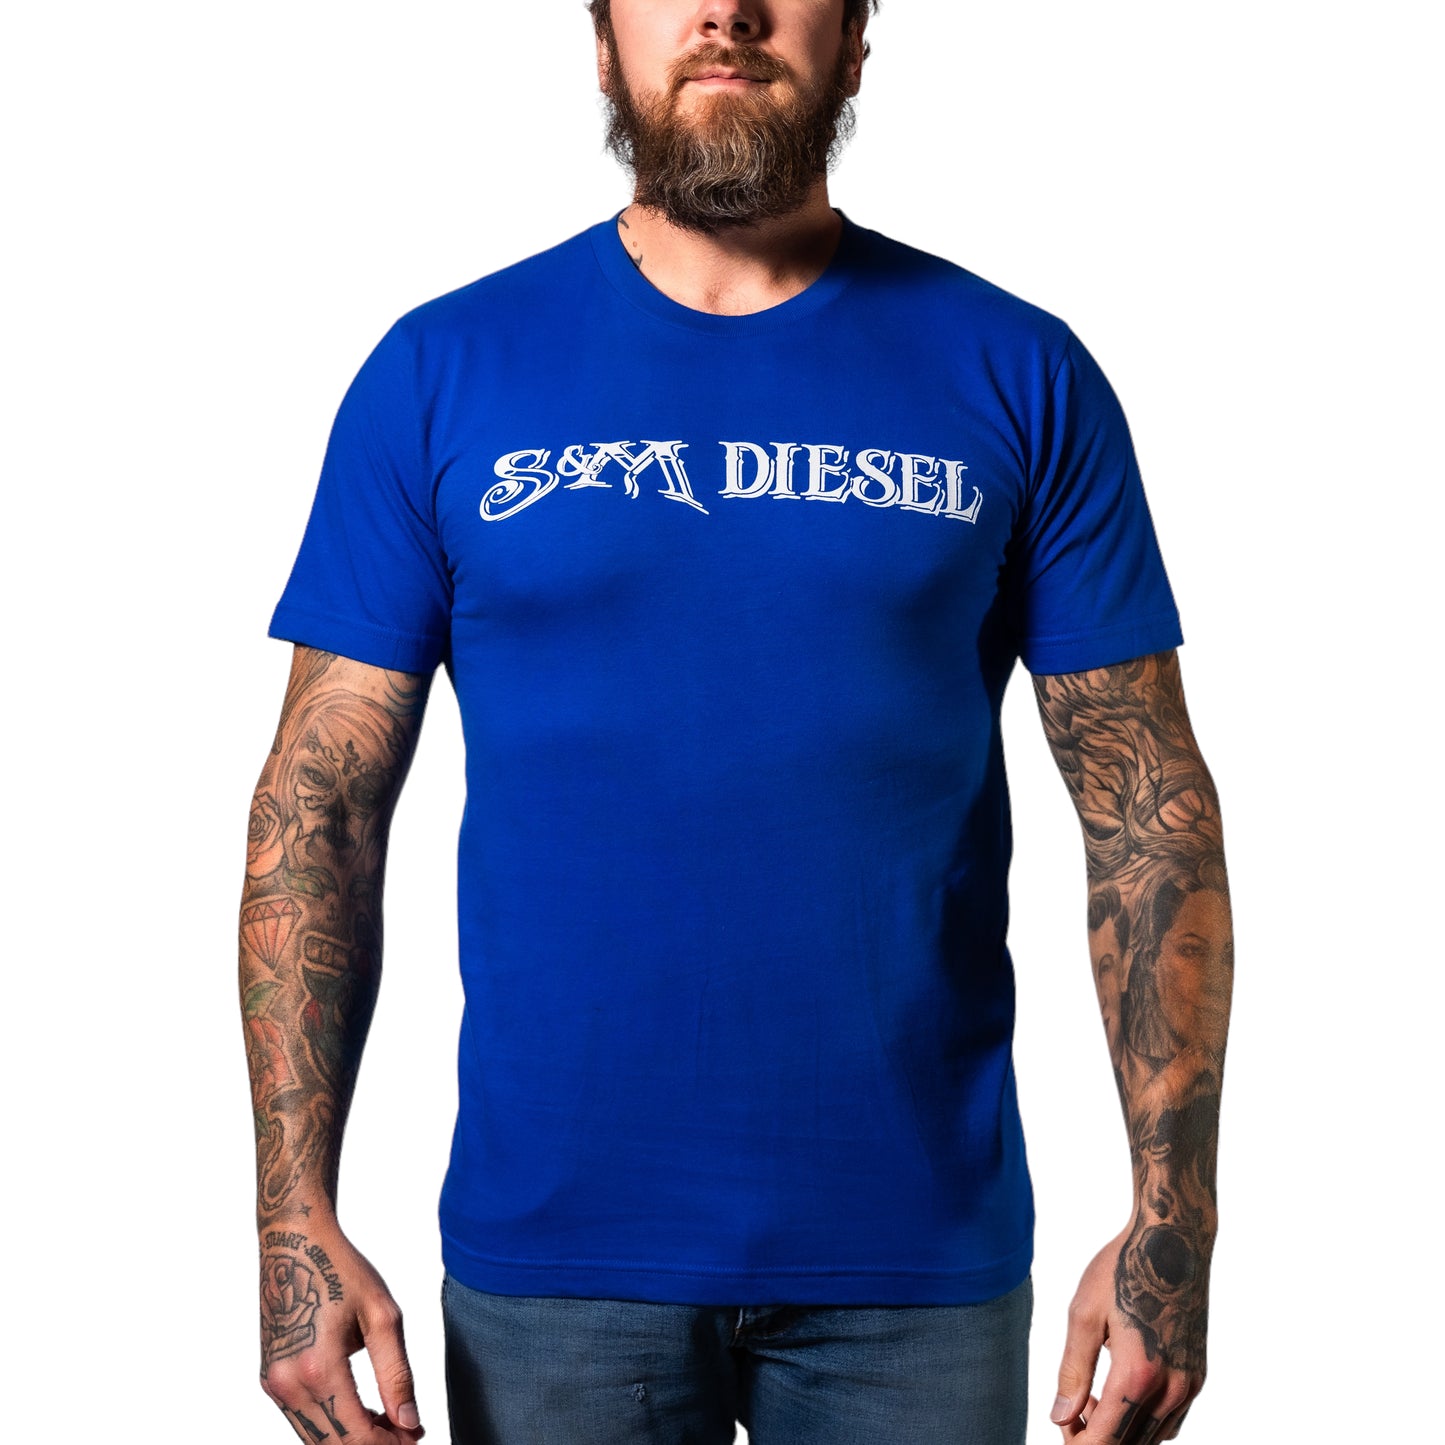 S&M Diesel short sleeve uni-sex t-shirt white logo- 10 color options avail